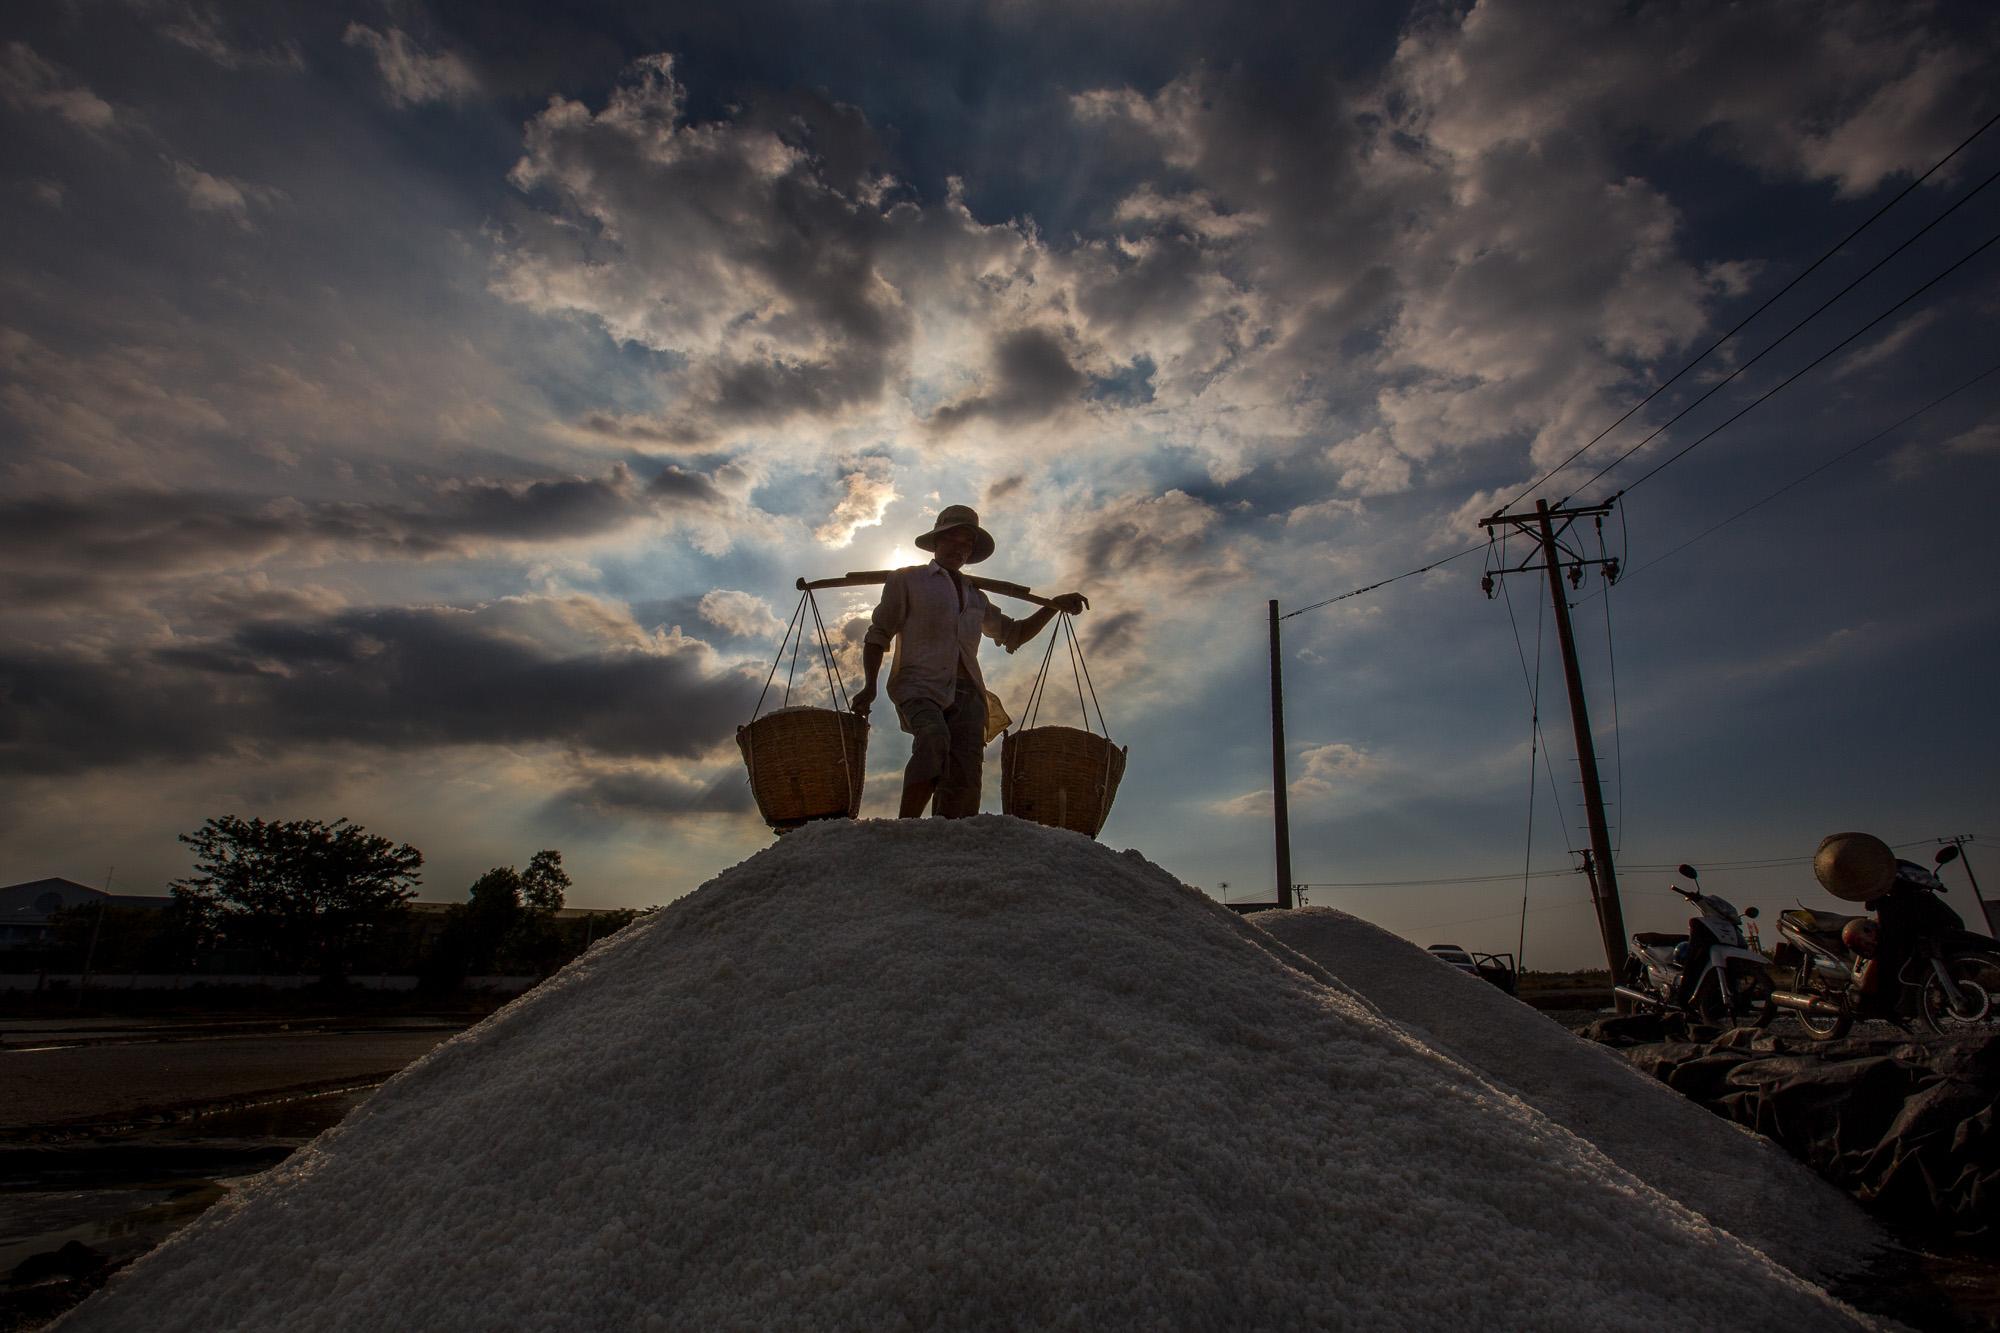 Salt Harvesting - 